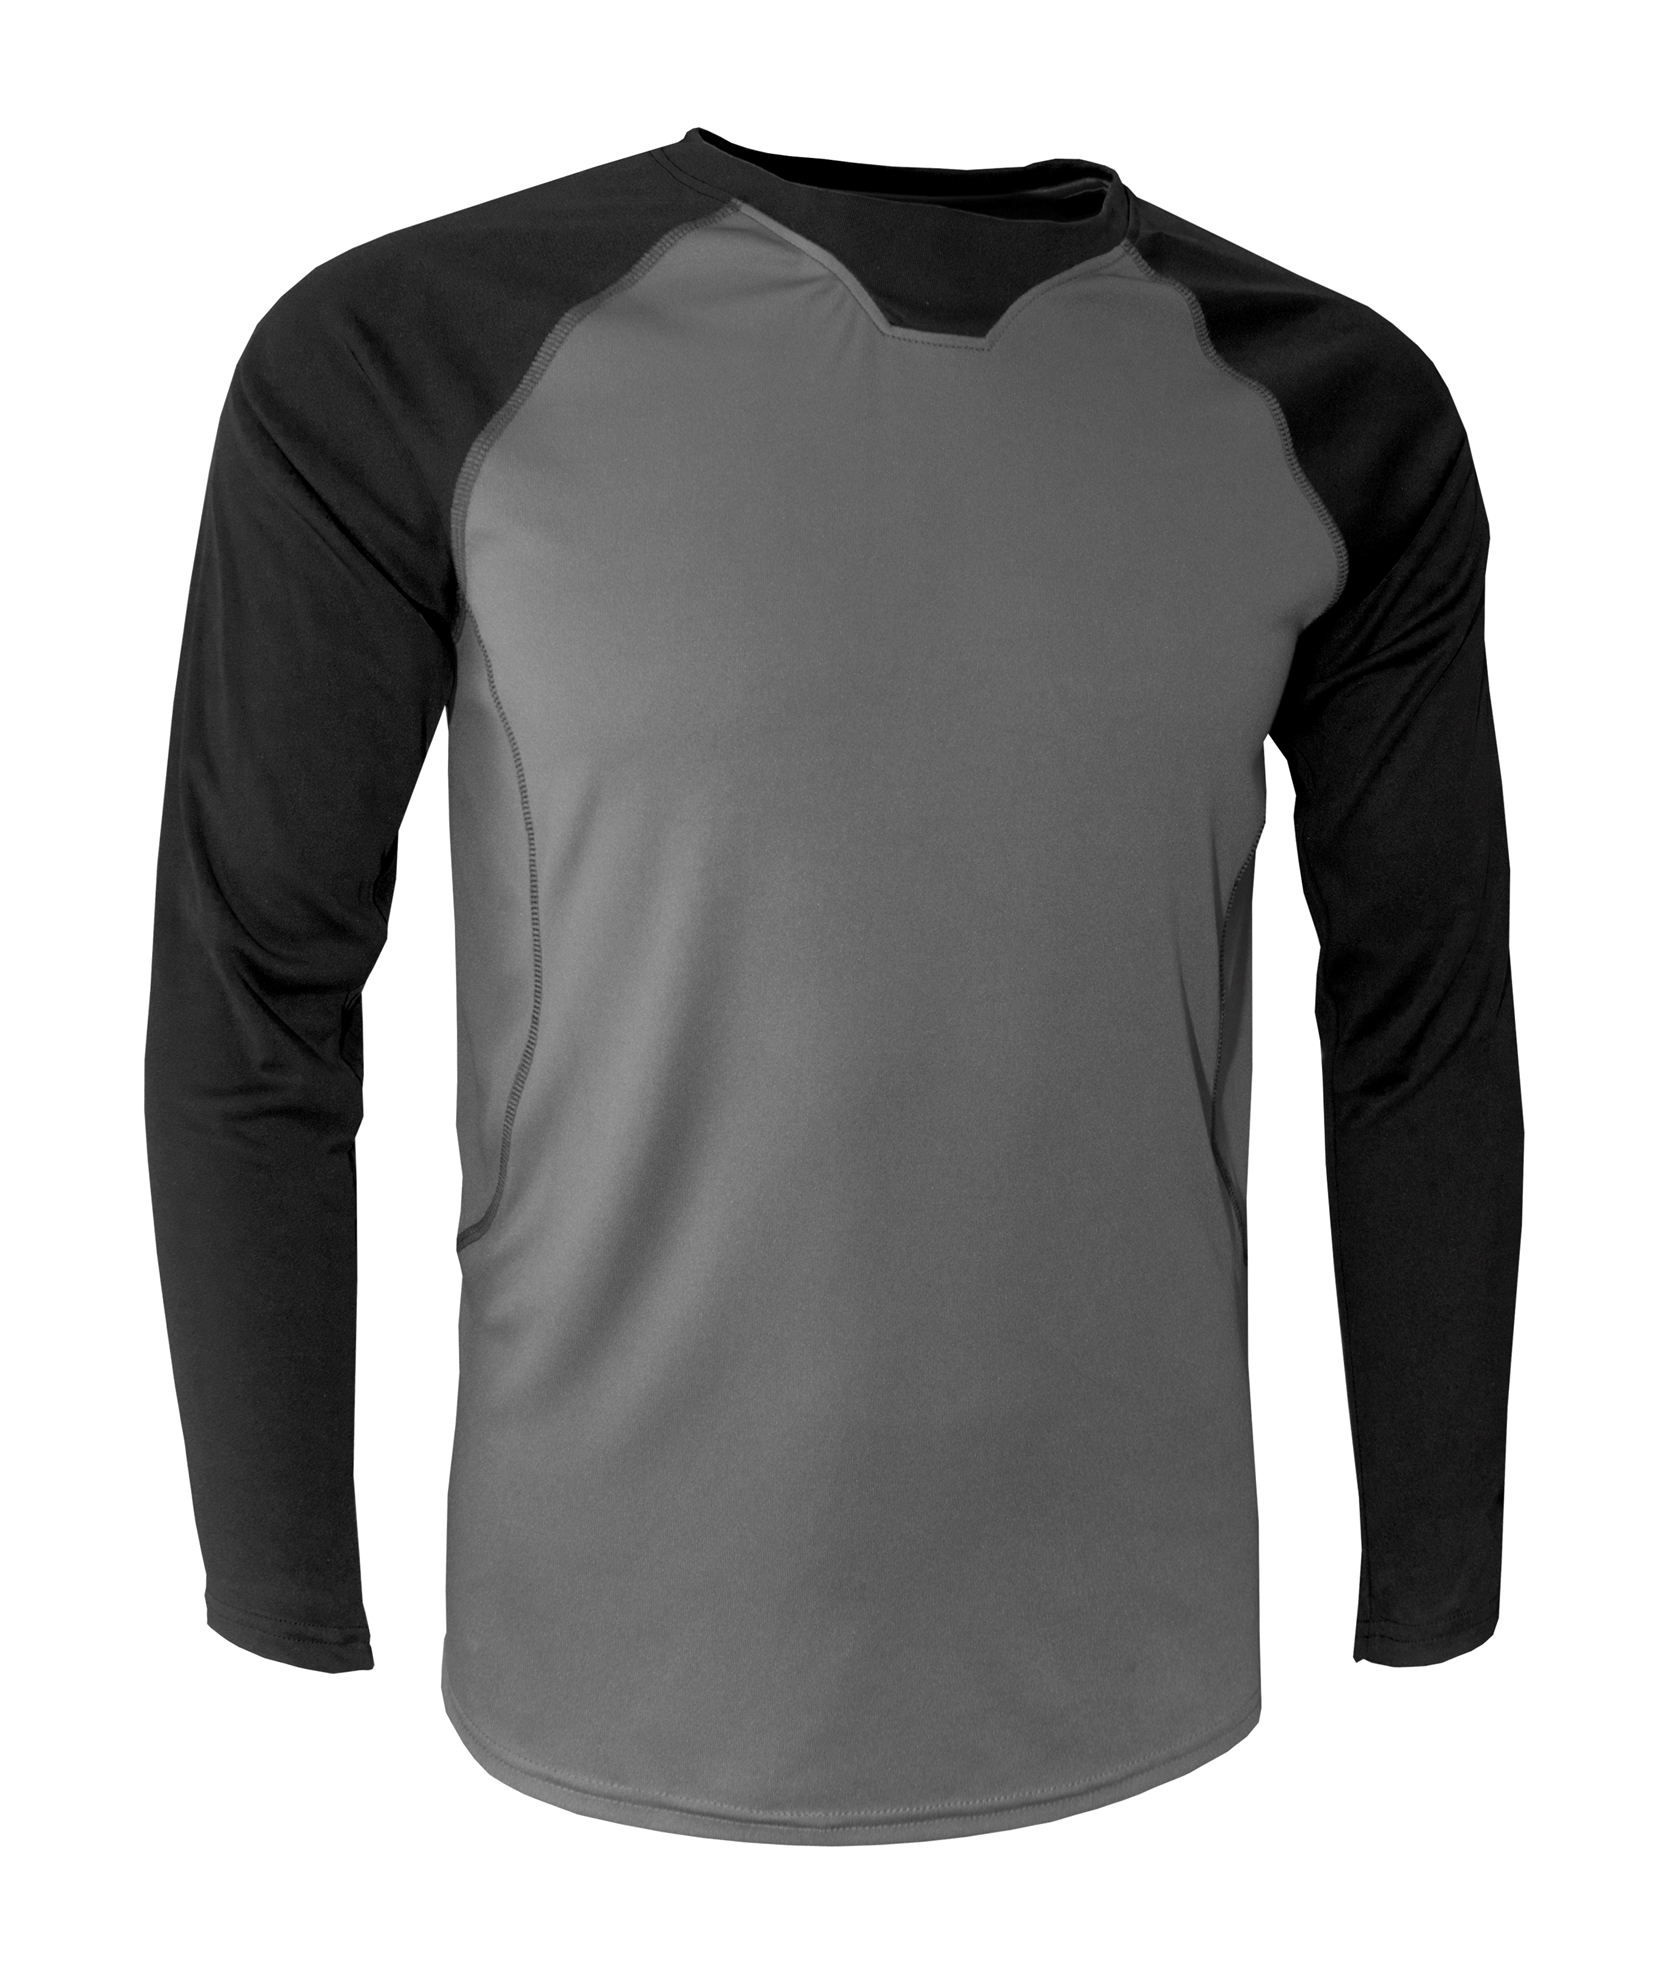 BAW Athletic Wear XT127 - Men's Xtreme-Tek Baseball Shirt